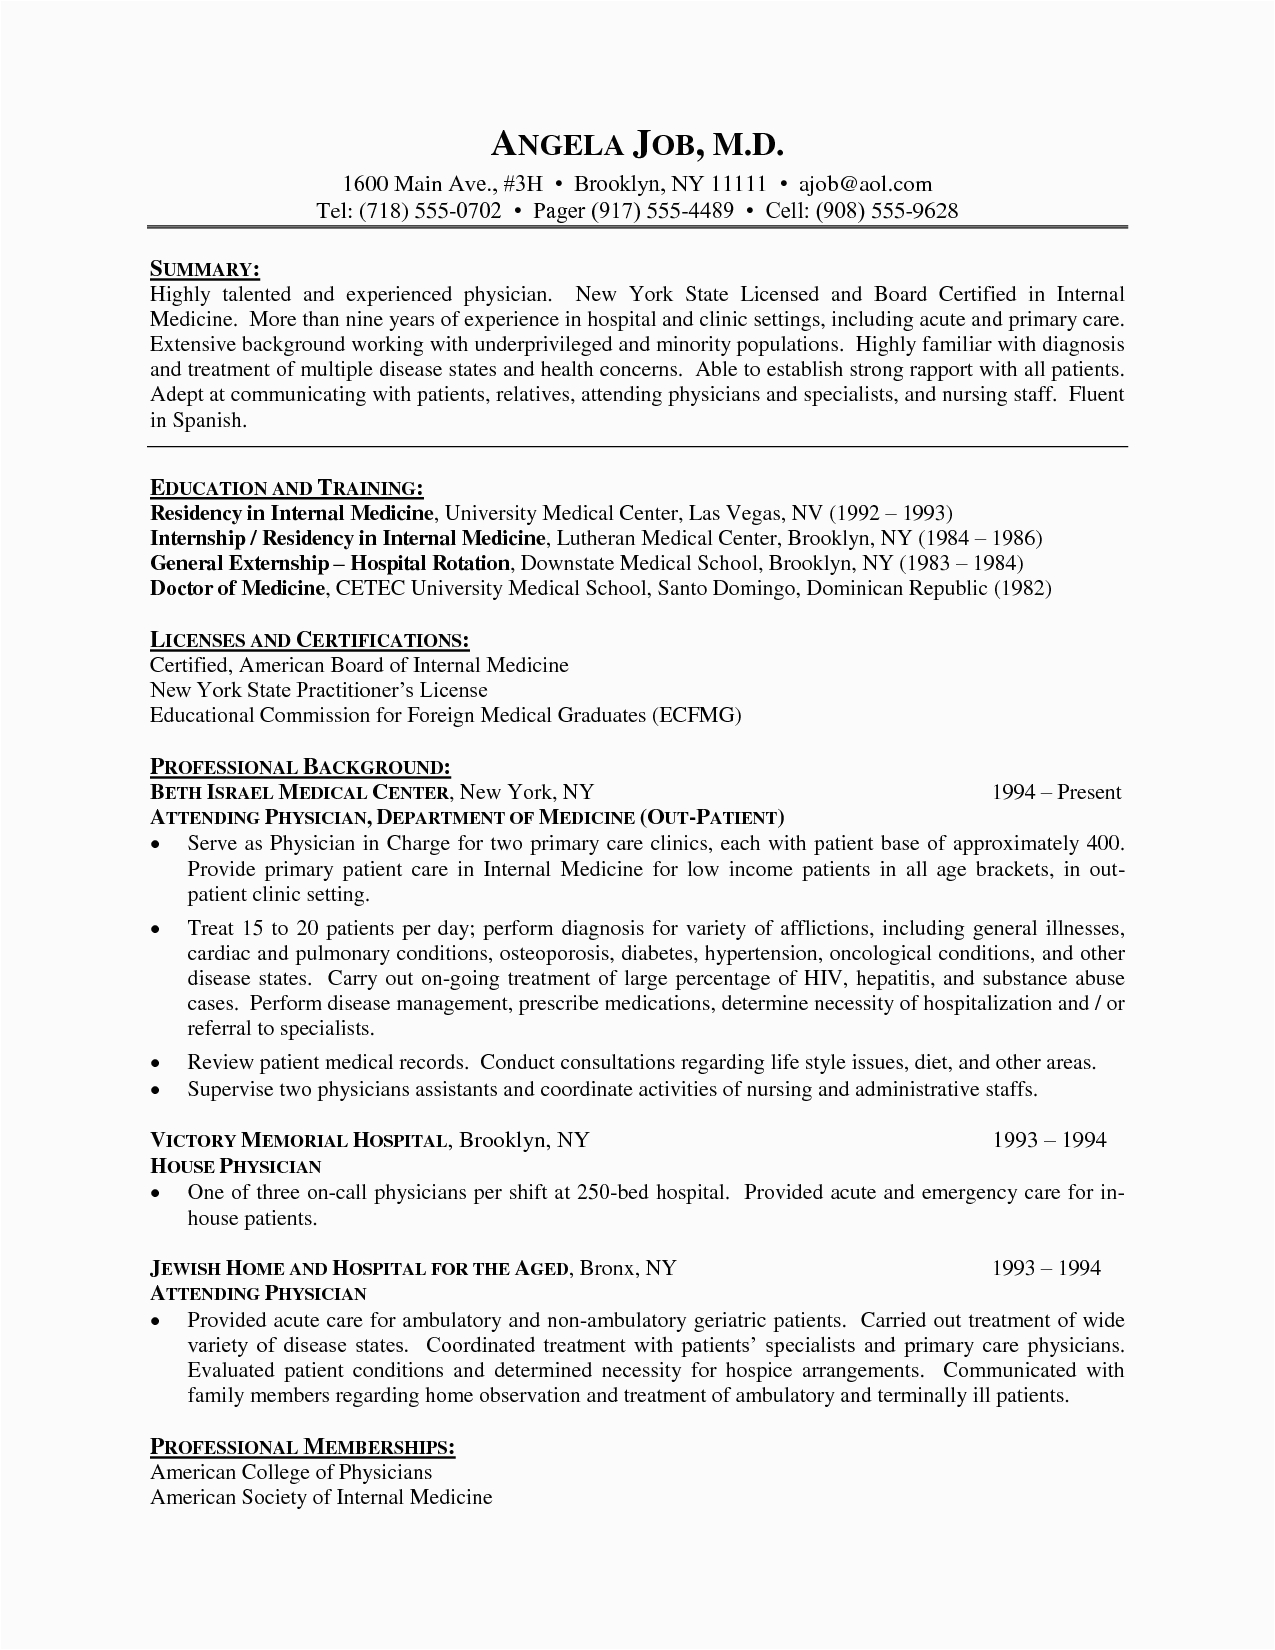 Sample for Healthcare Resume Summary Statement Er Physician assistant Resume Steve